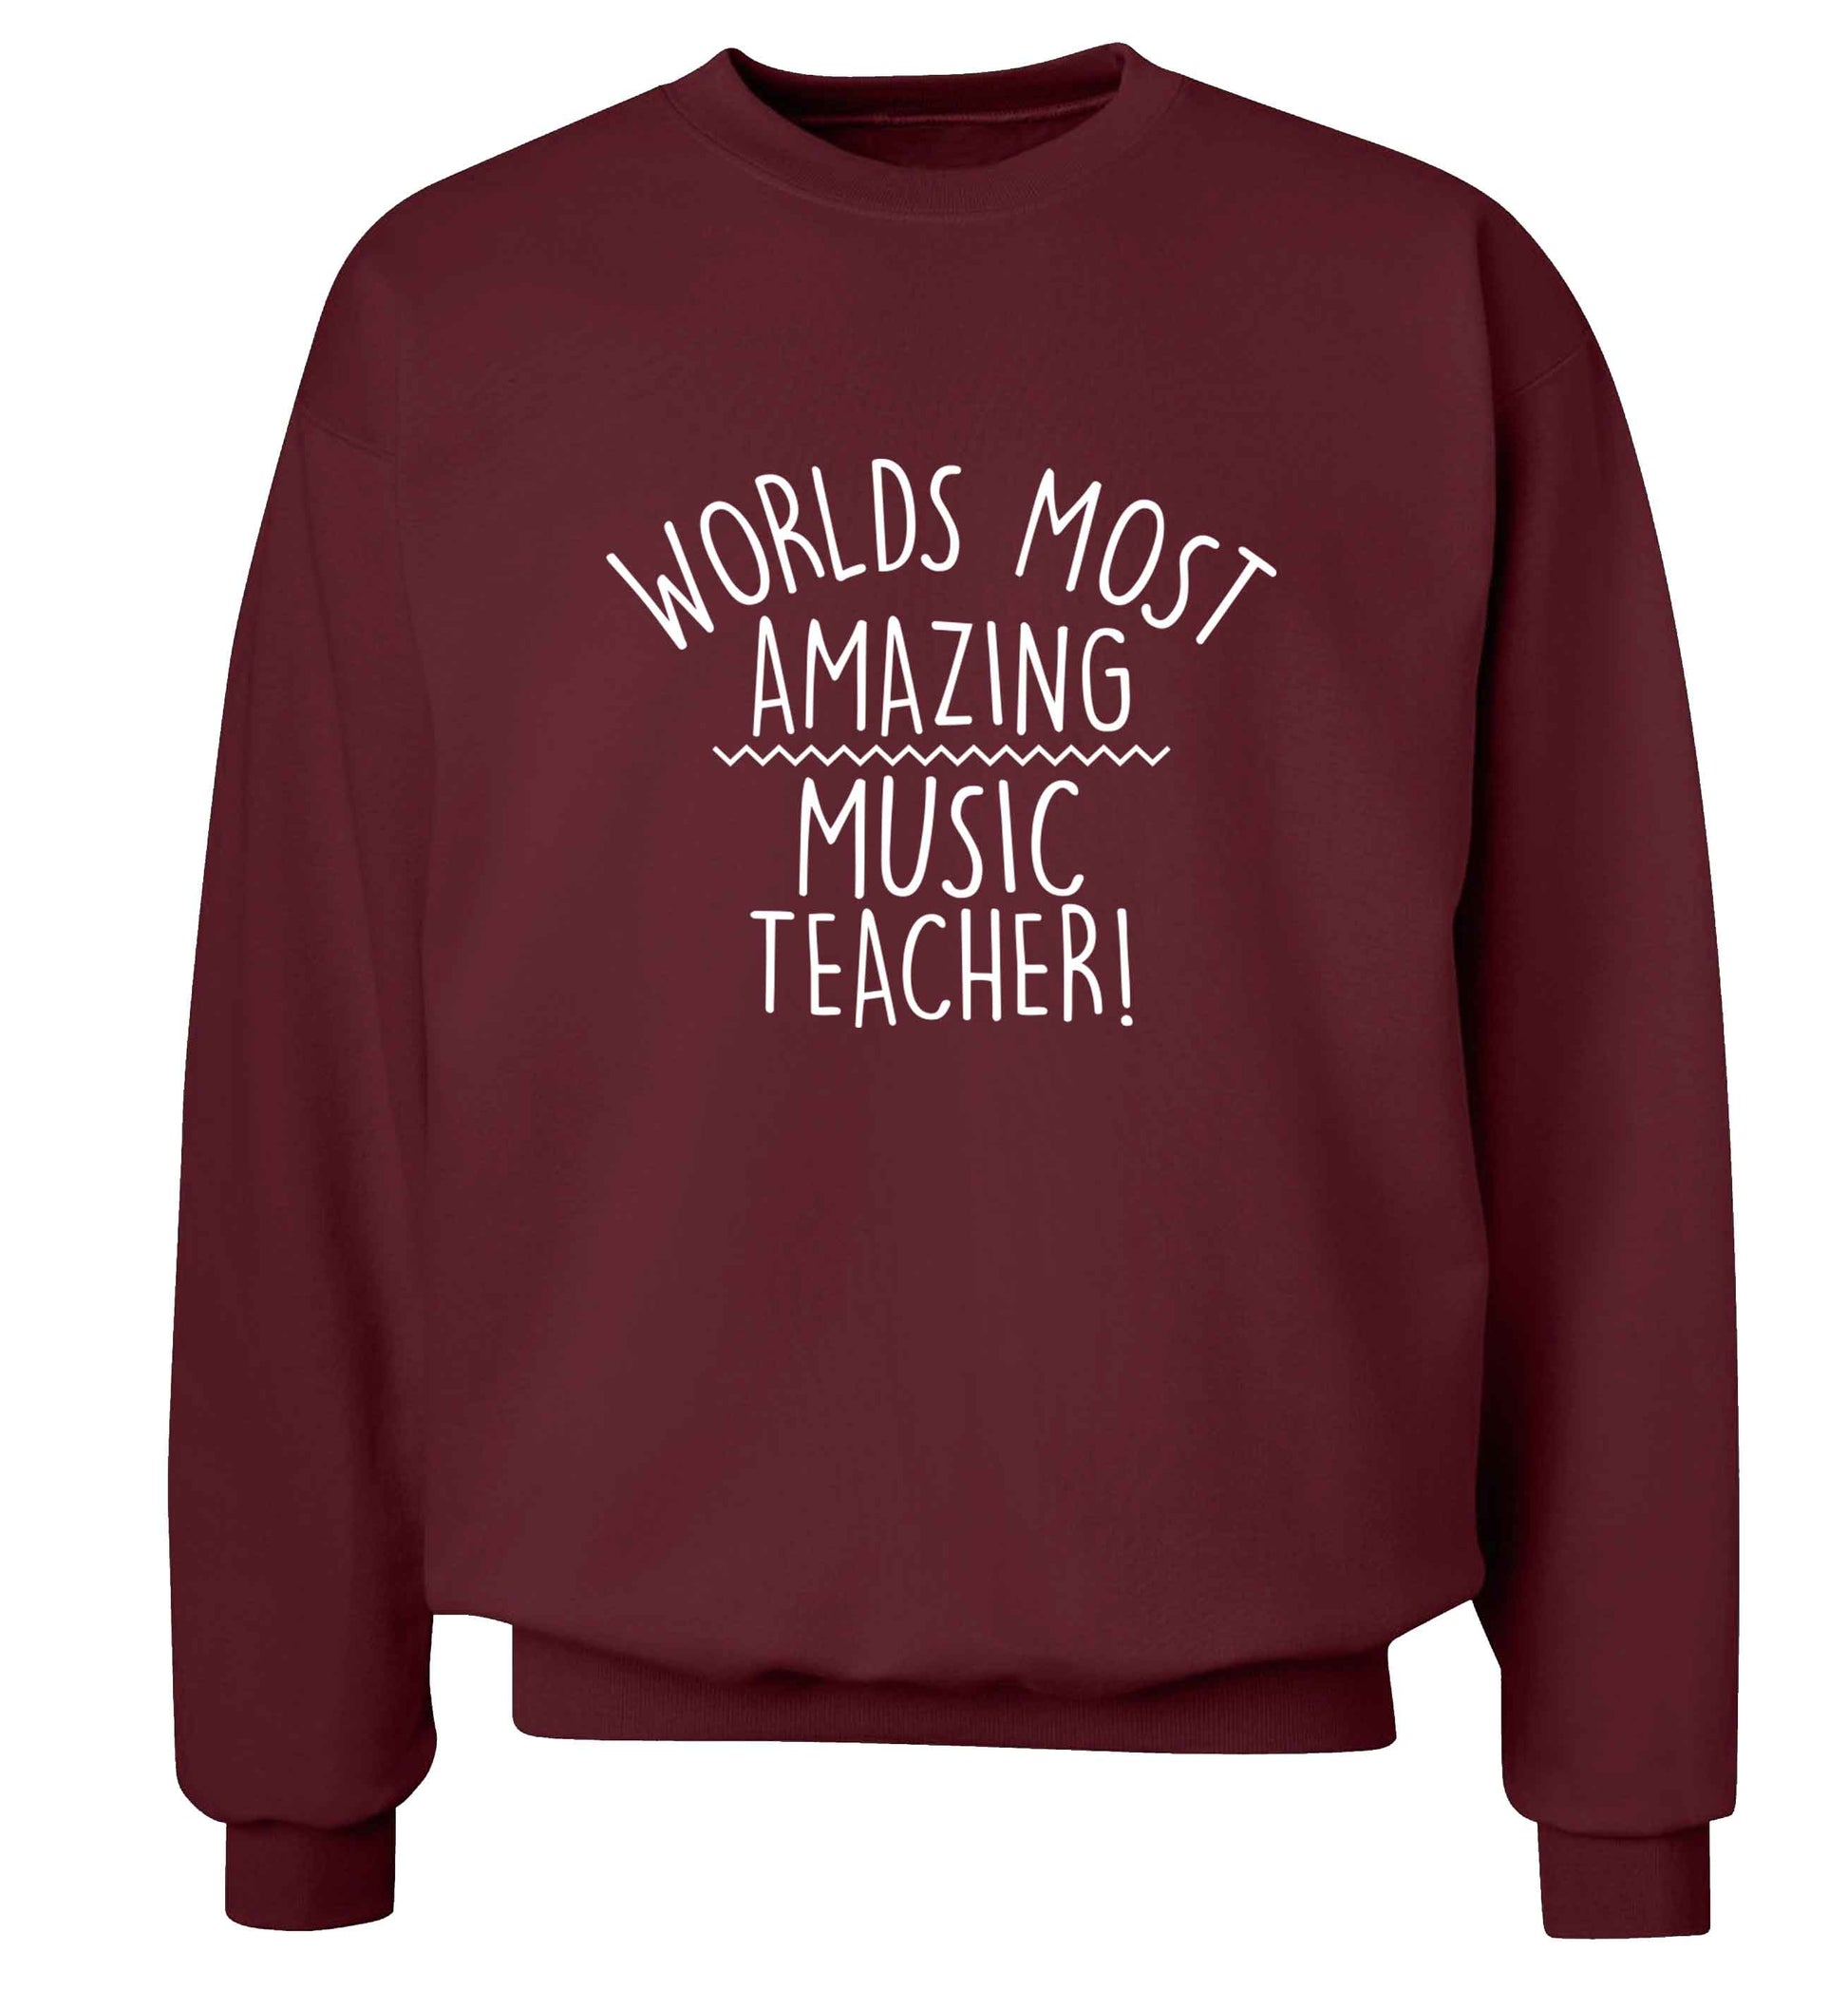 Worlds most amazing music teacher adult's unisex maroon sweater 2XL